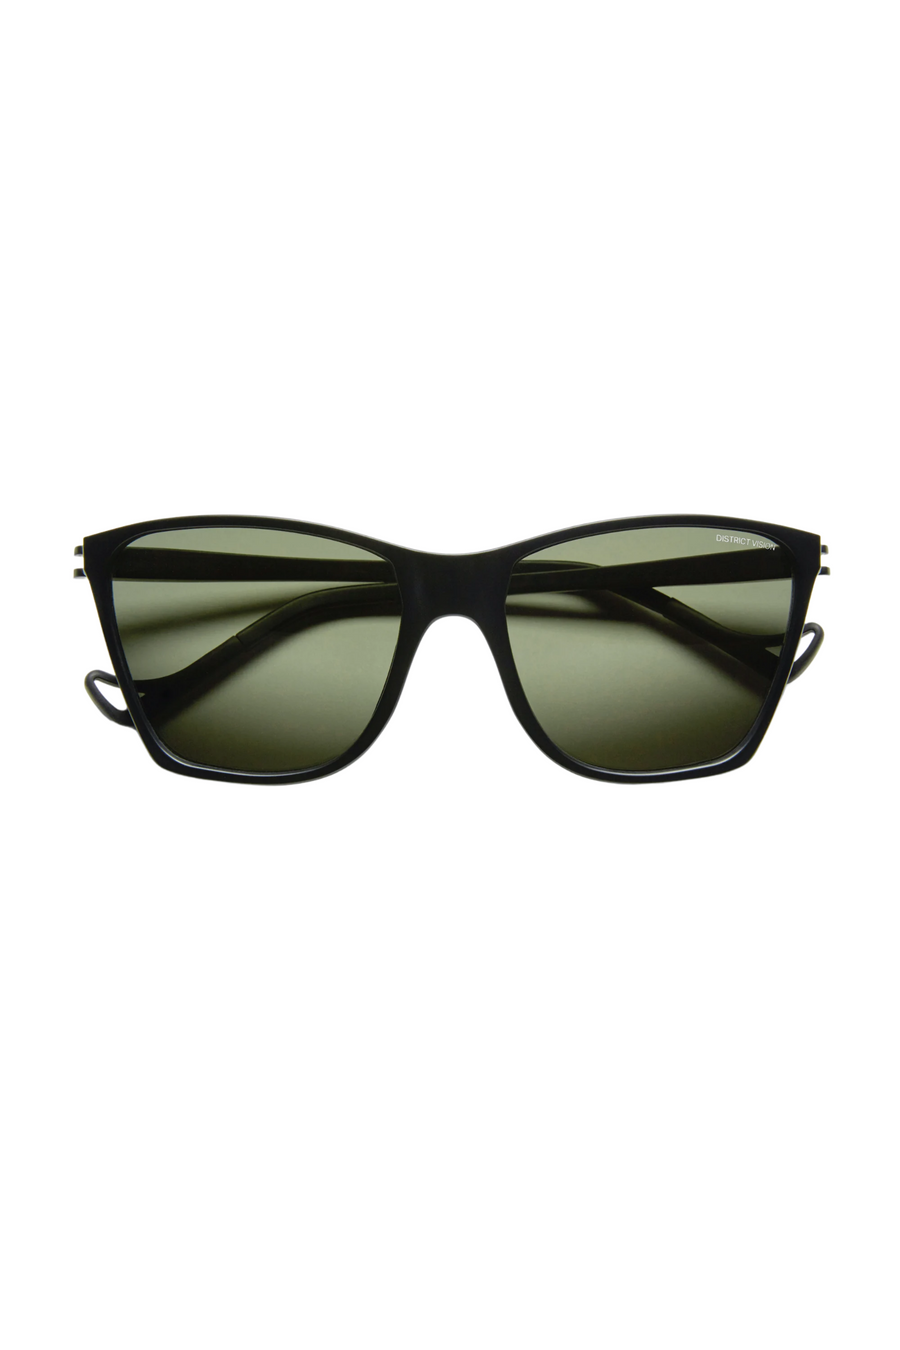 Sunglasses Keiichi Standard Black/G15